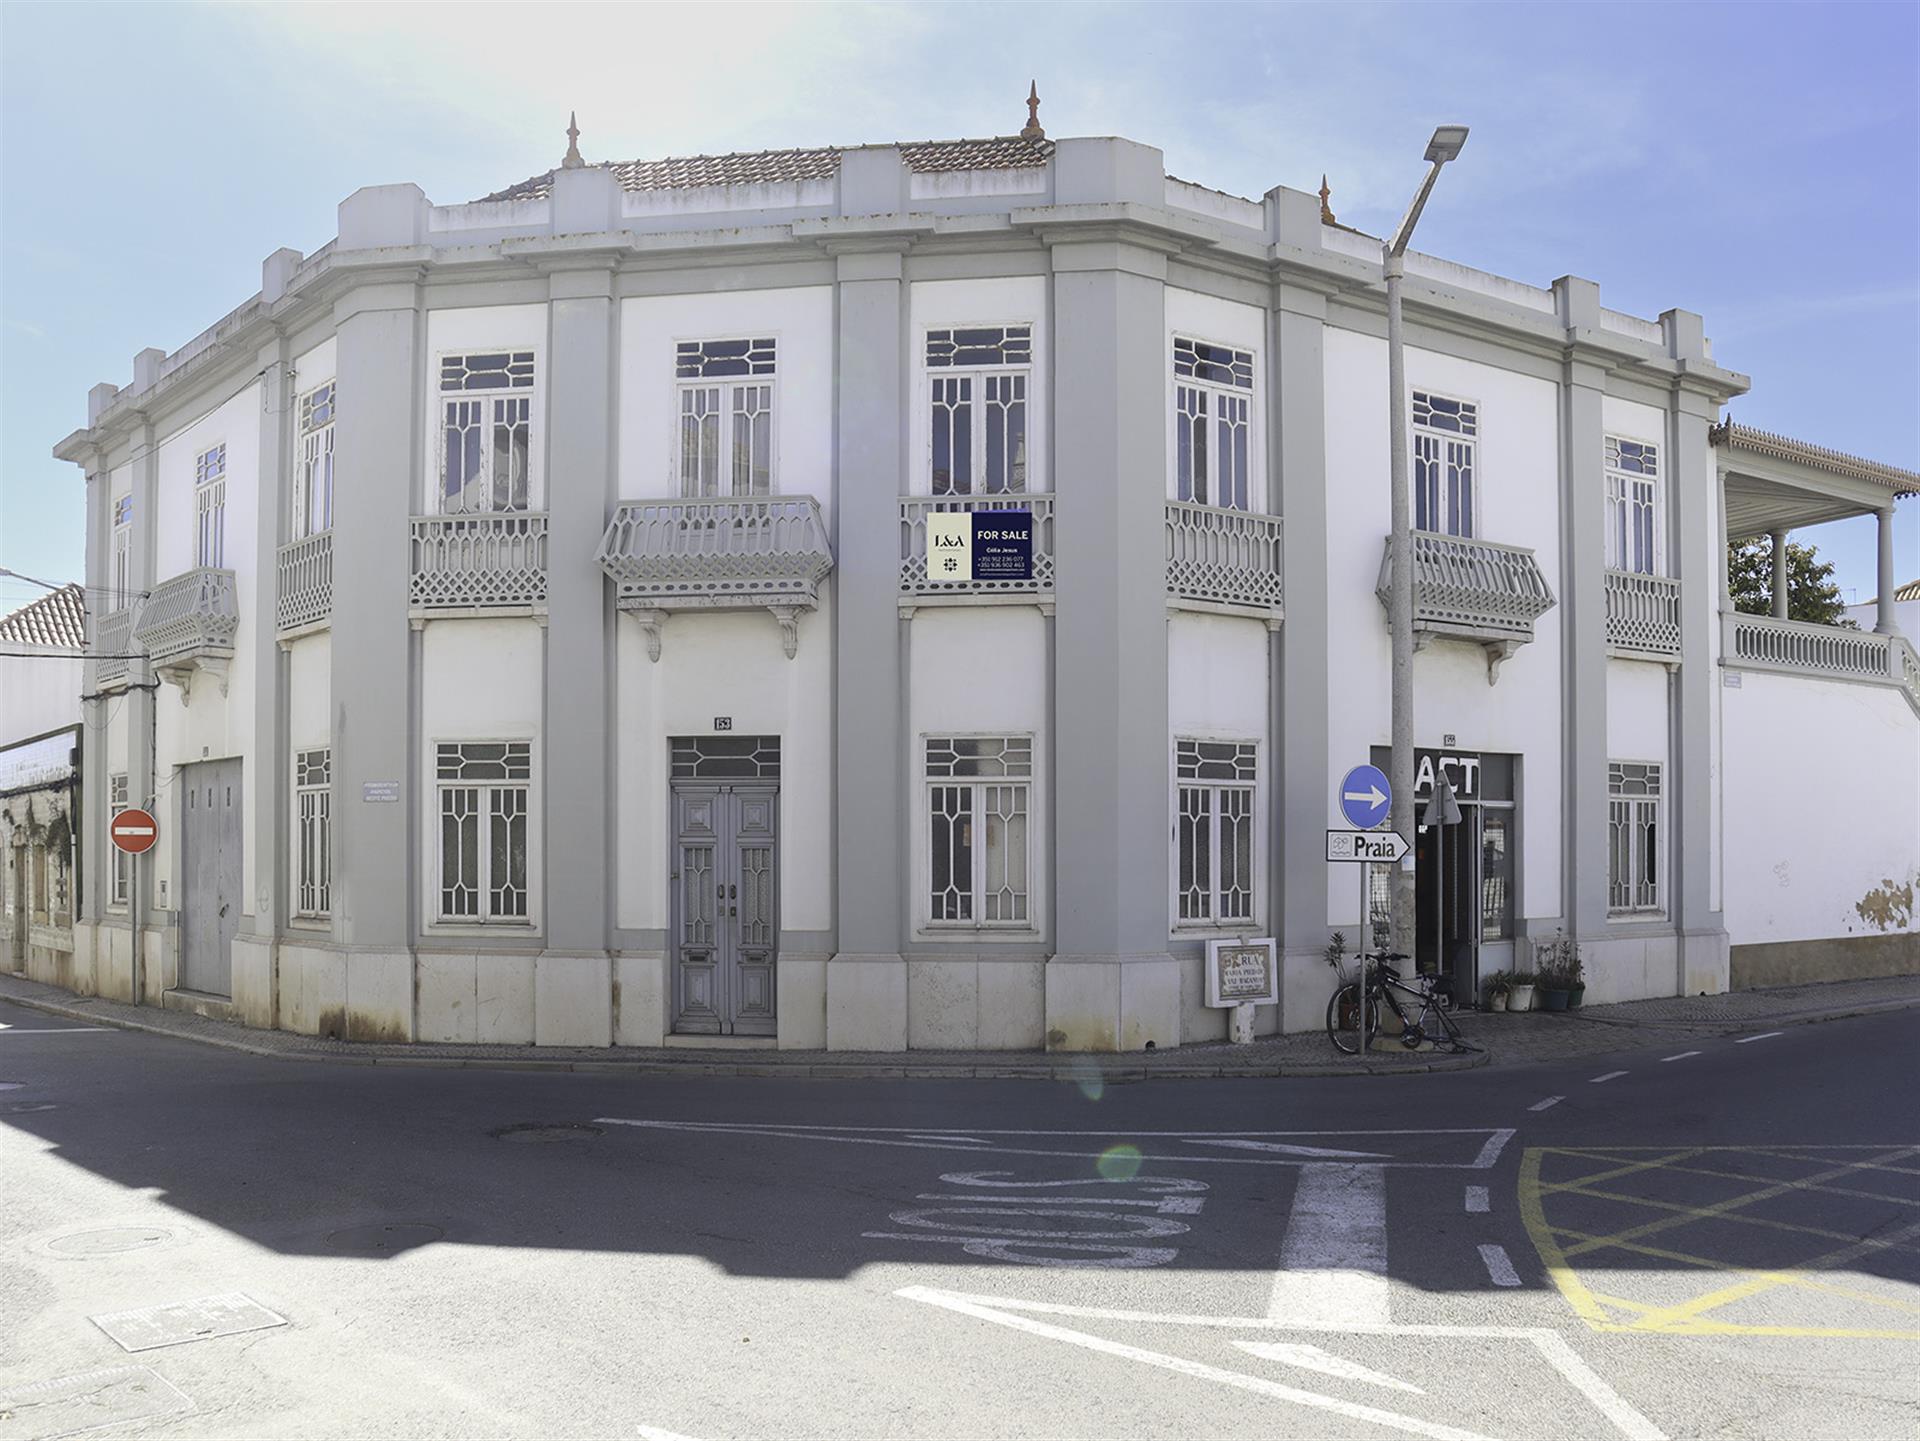 Huis - Herenhuis - T7 - Centrum van Tavira - Algarve